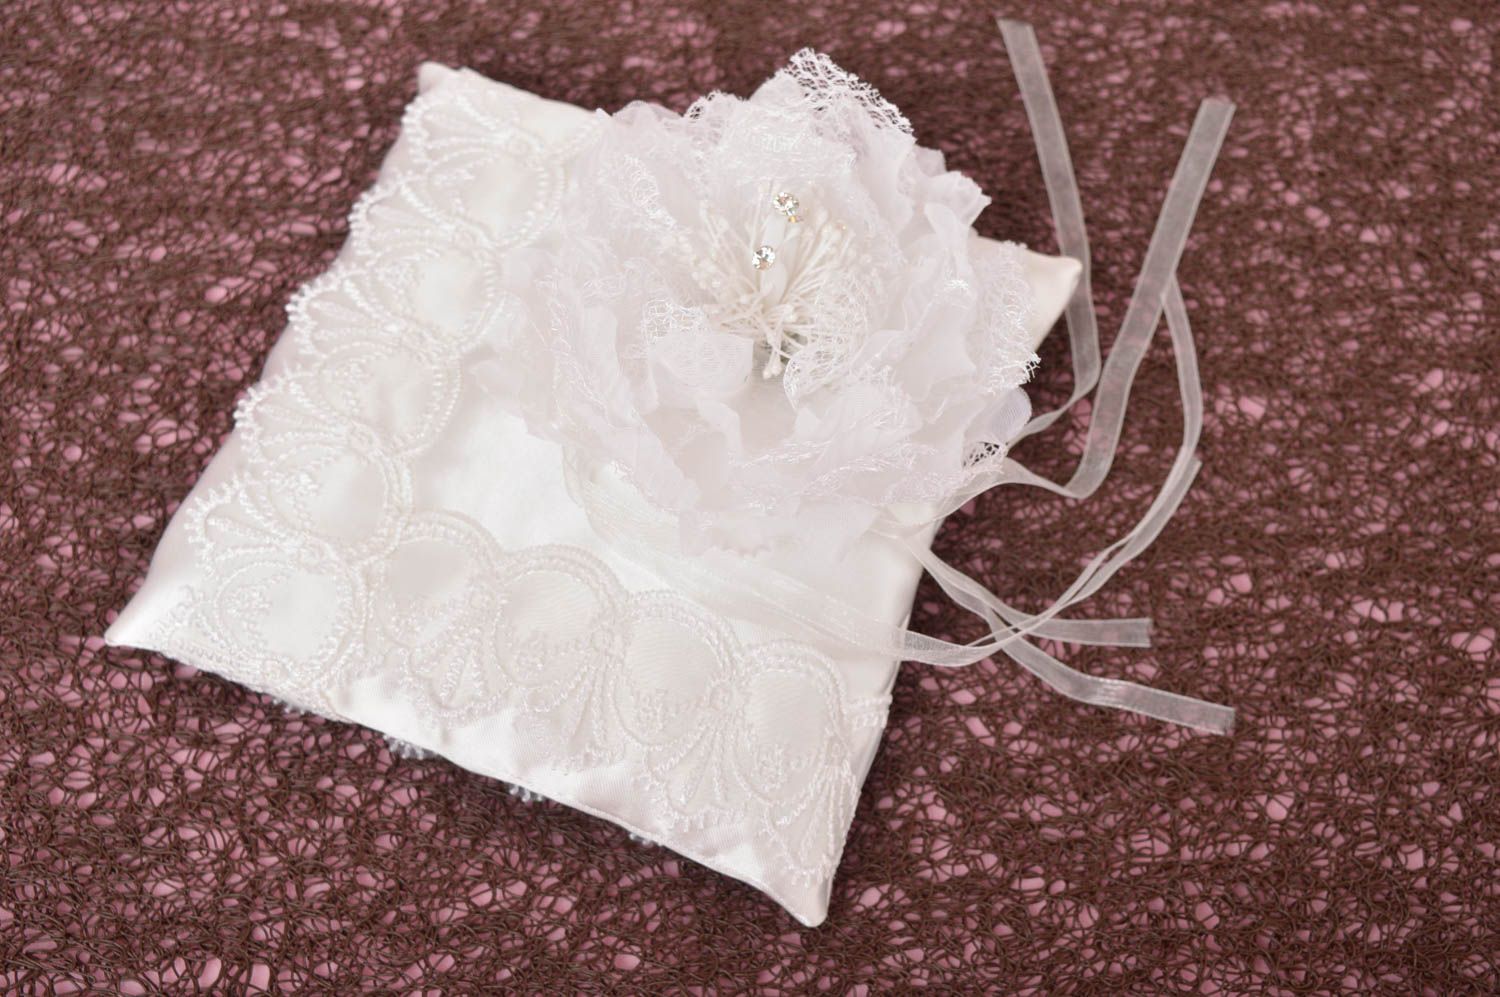 Wedding accessories wedding attributes pillow for wedding rings wedding decor photo 1